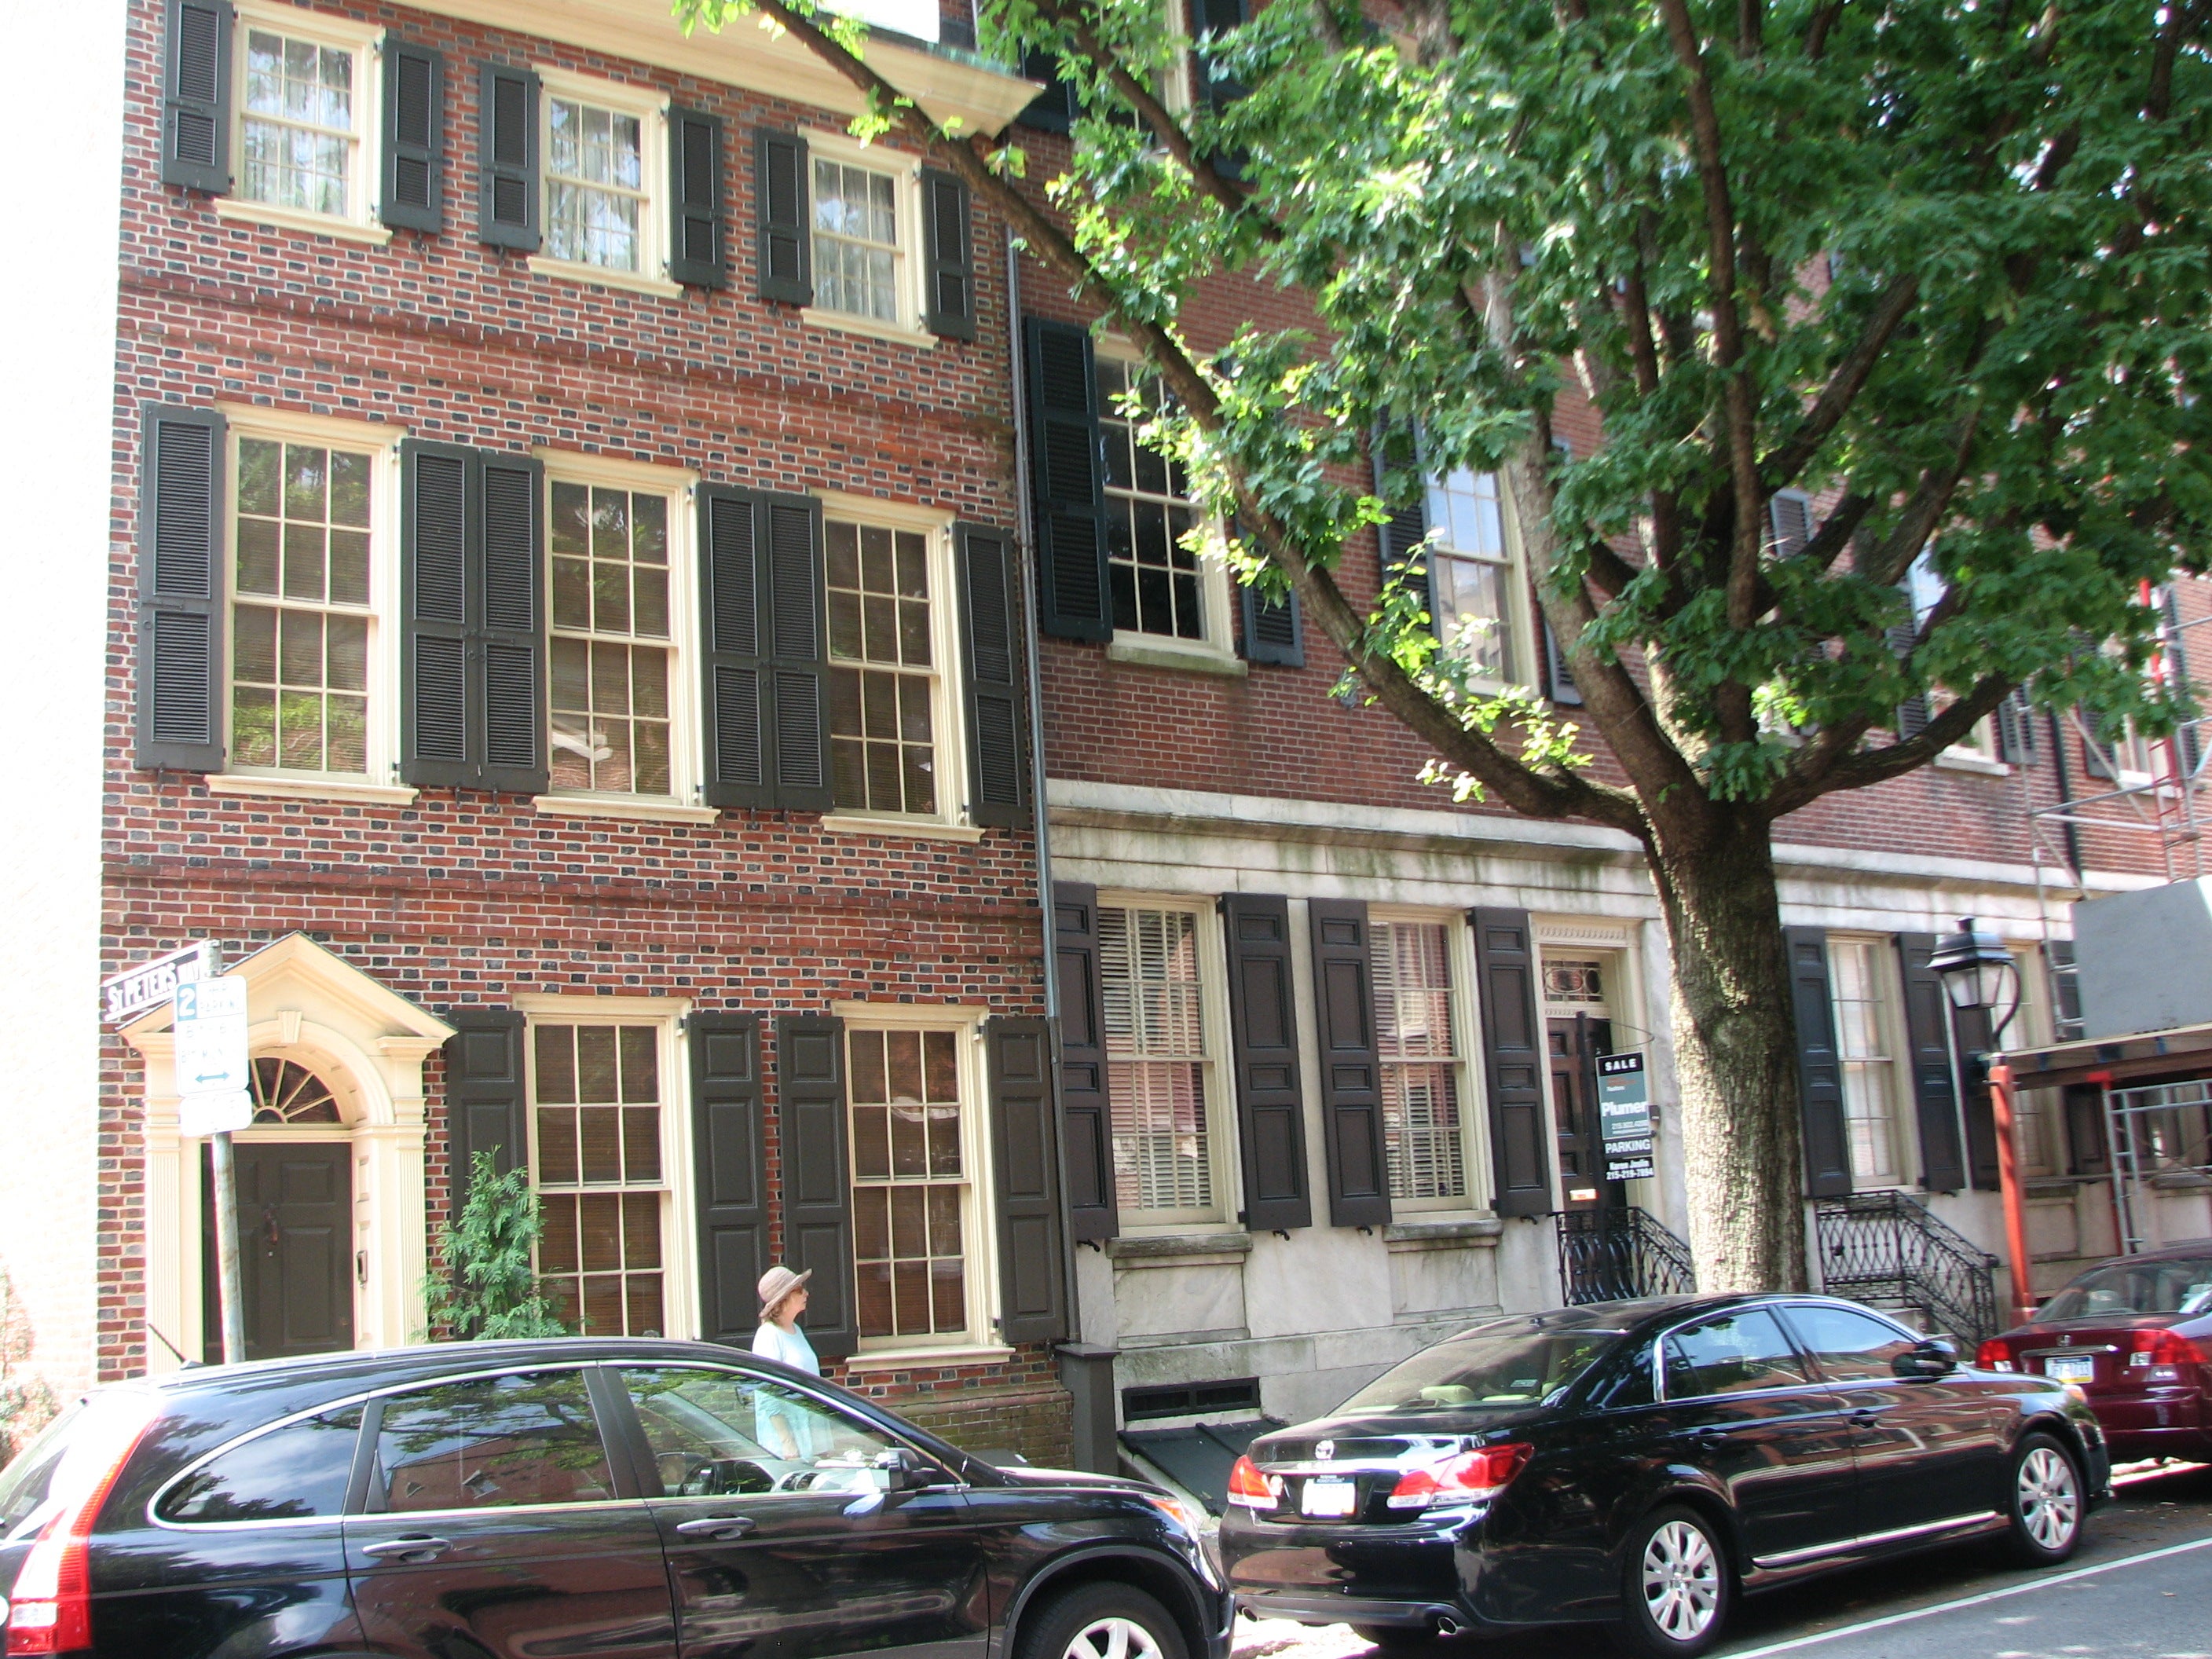 The houses around Girard Row are mainly brick.